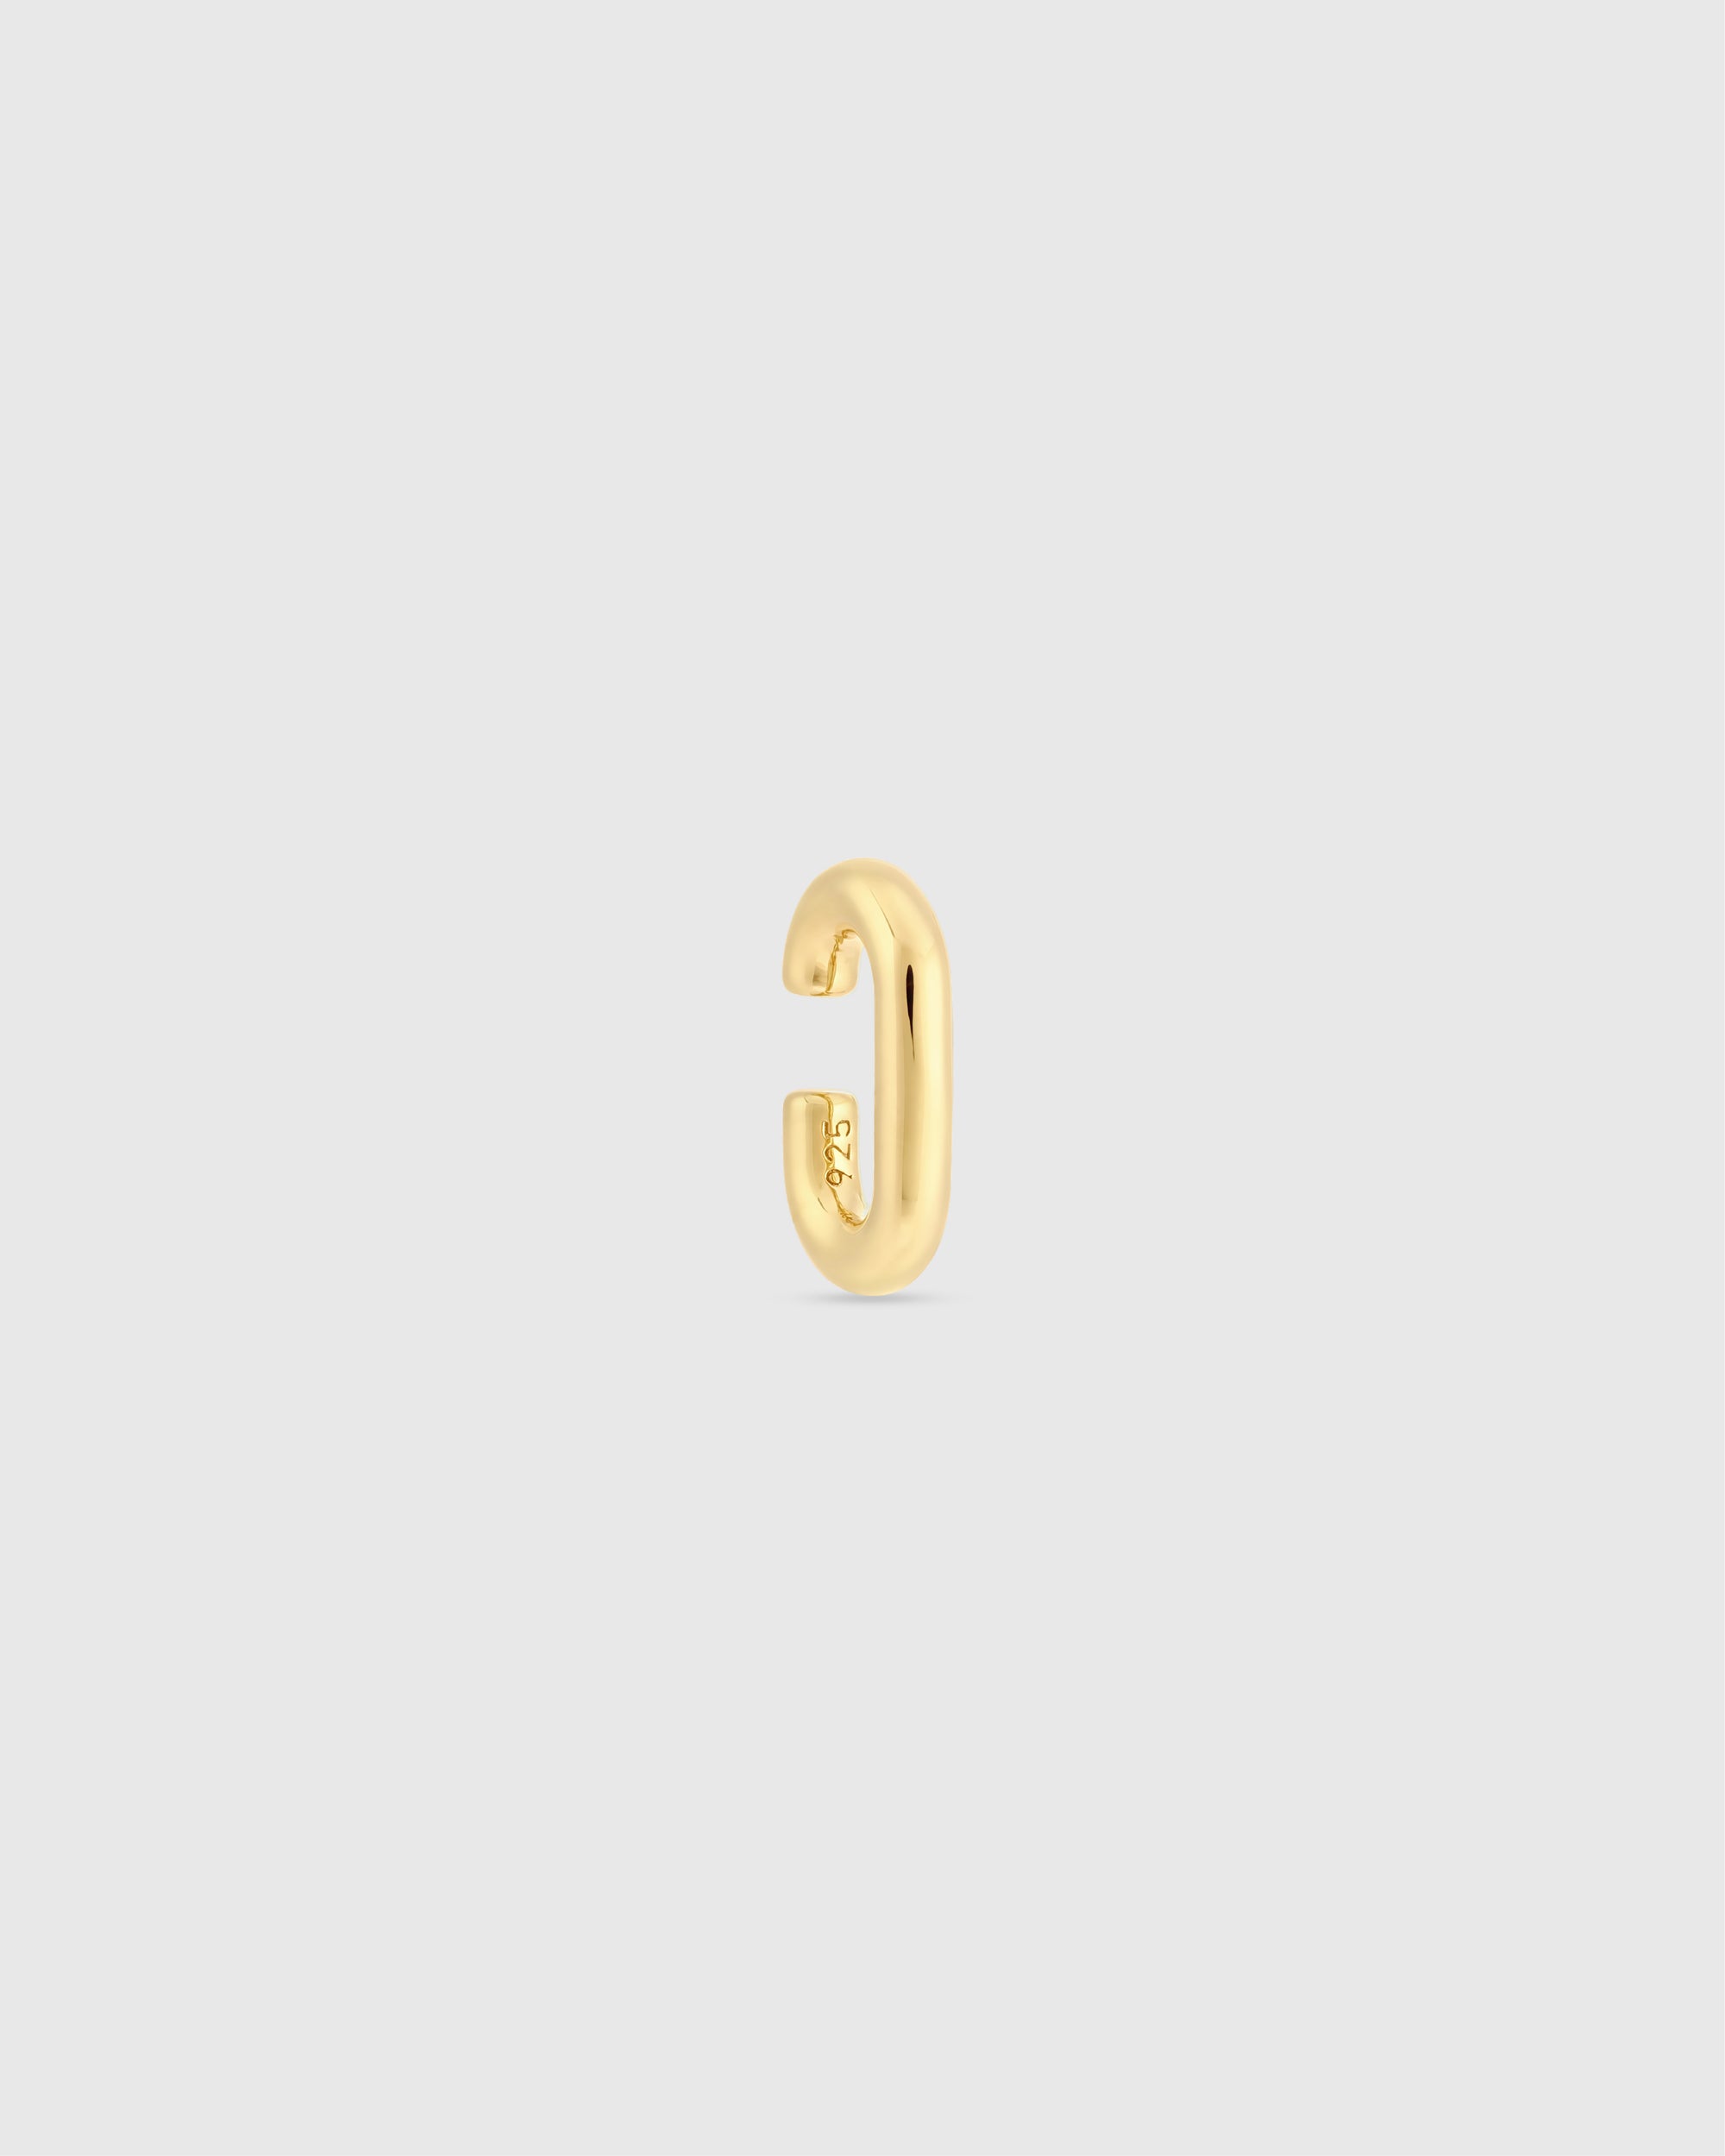 Capsule Short ear cuff in 18k yellow gold vermeil